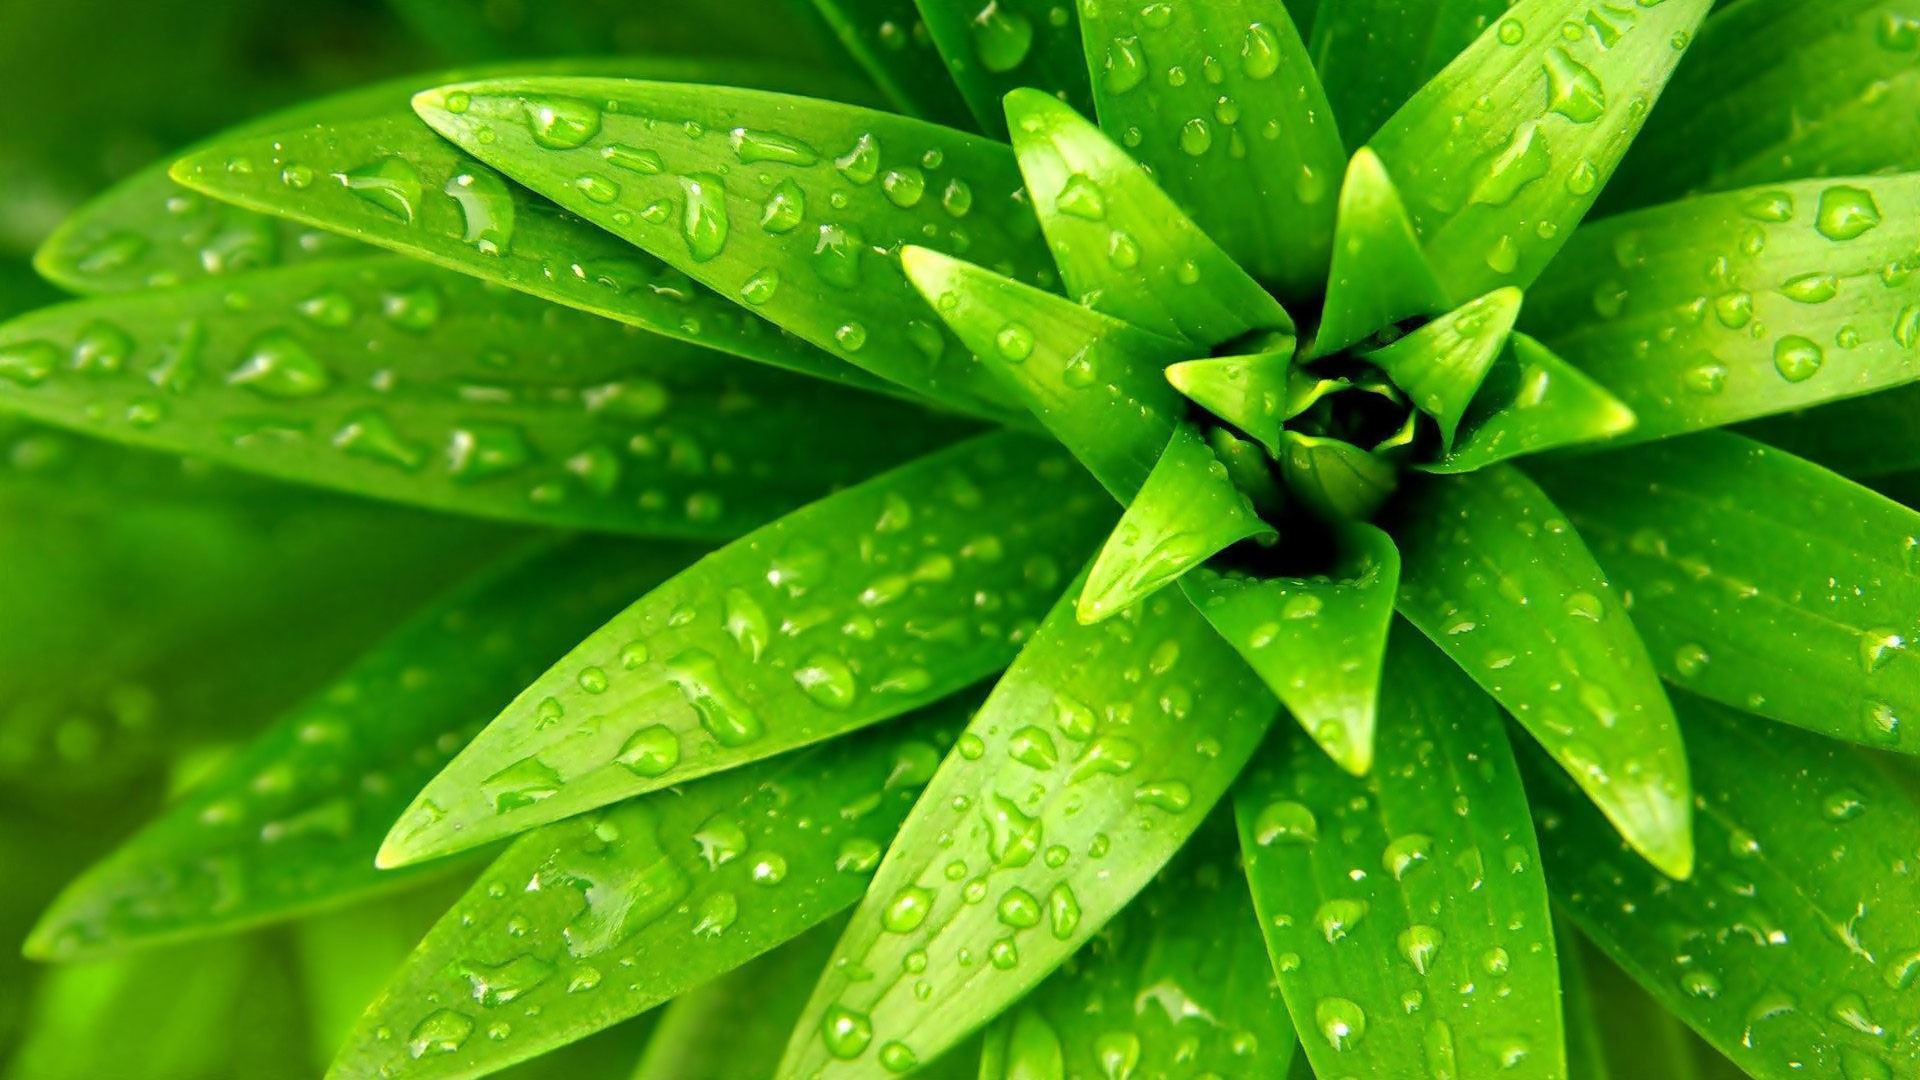 1920x1080 hd pics photos green leaves nature water drops desktop background wallpaper  2